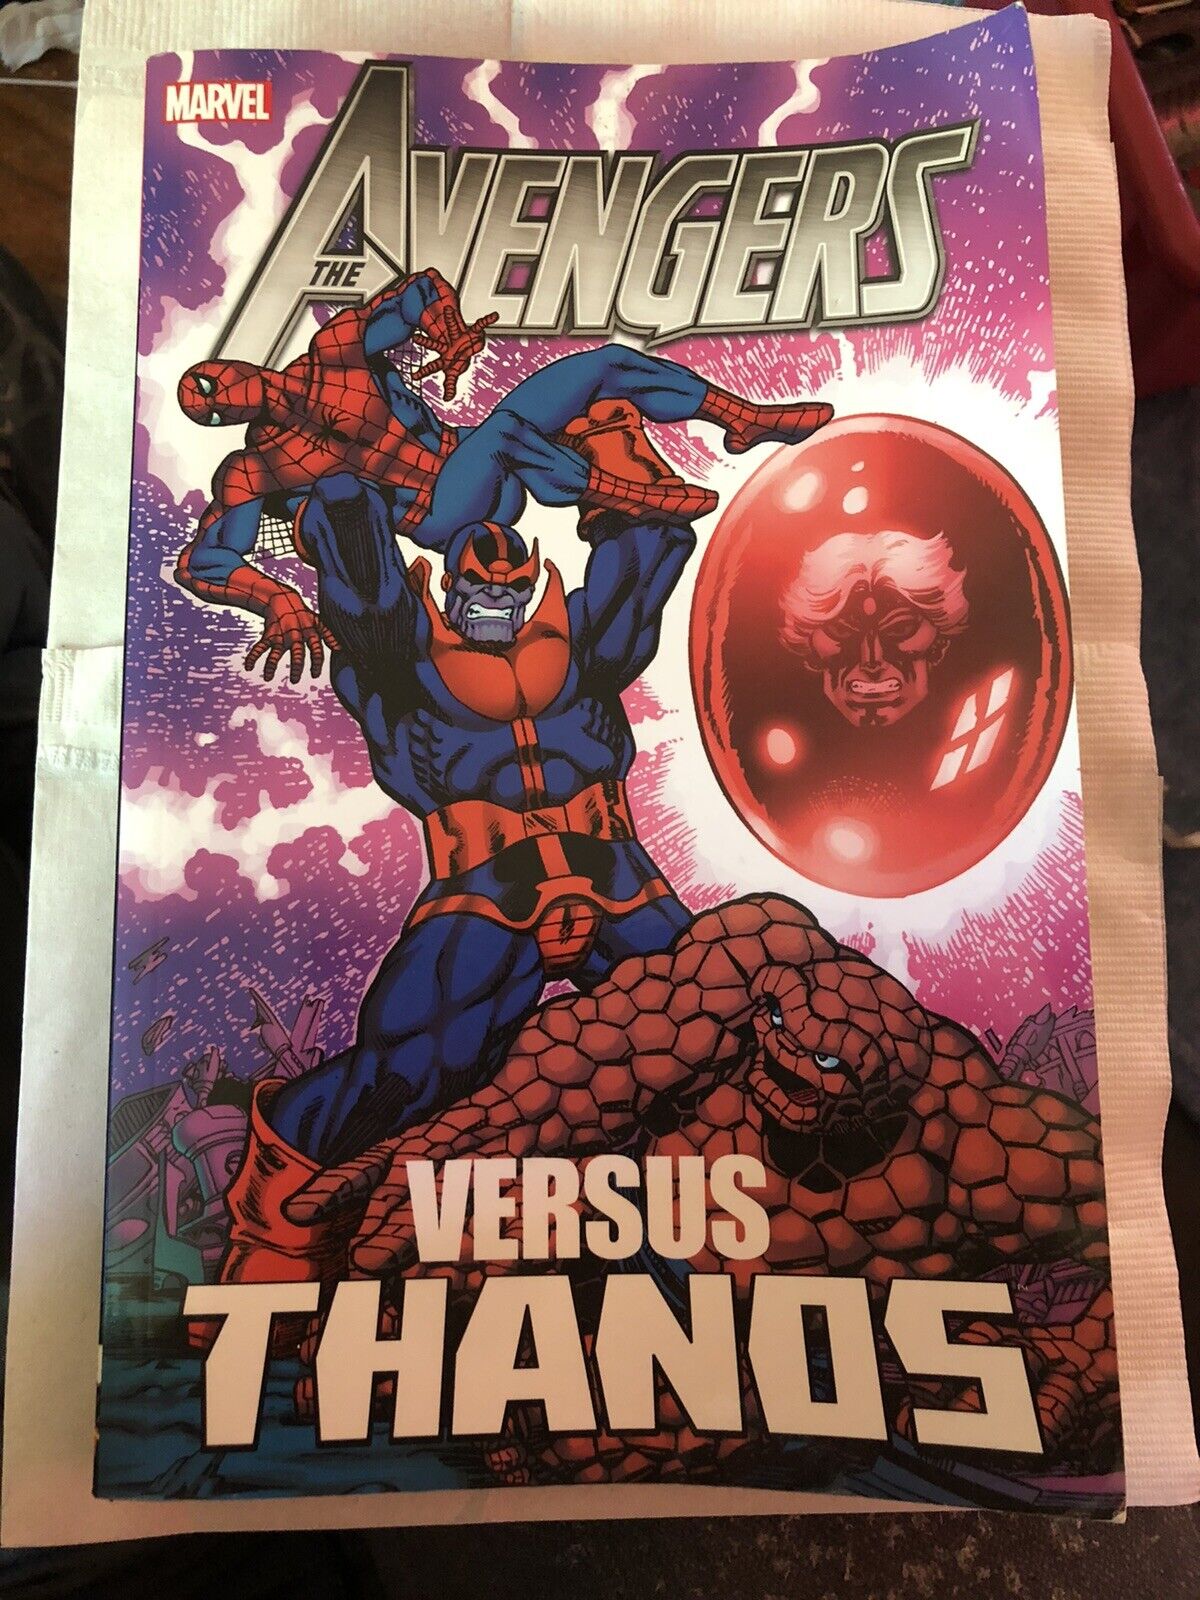 The Avengers Vs. Thanos (Marvel Comics February 2013)